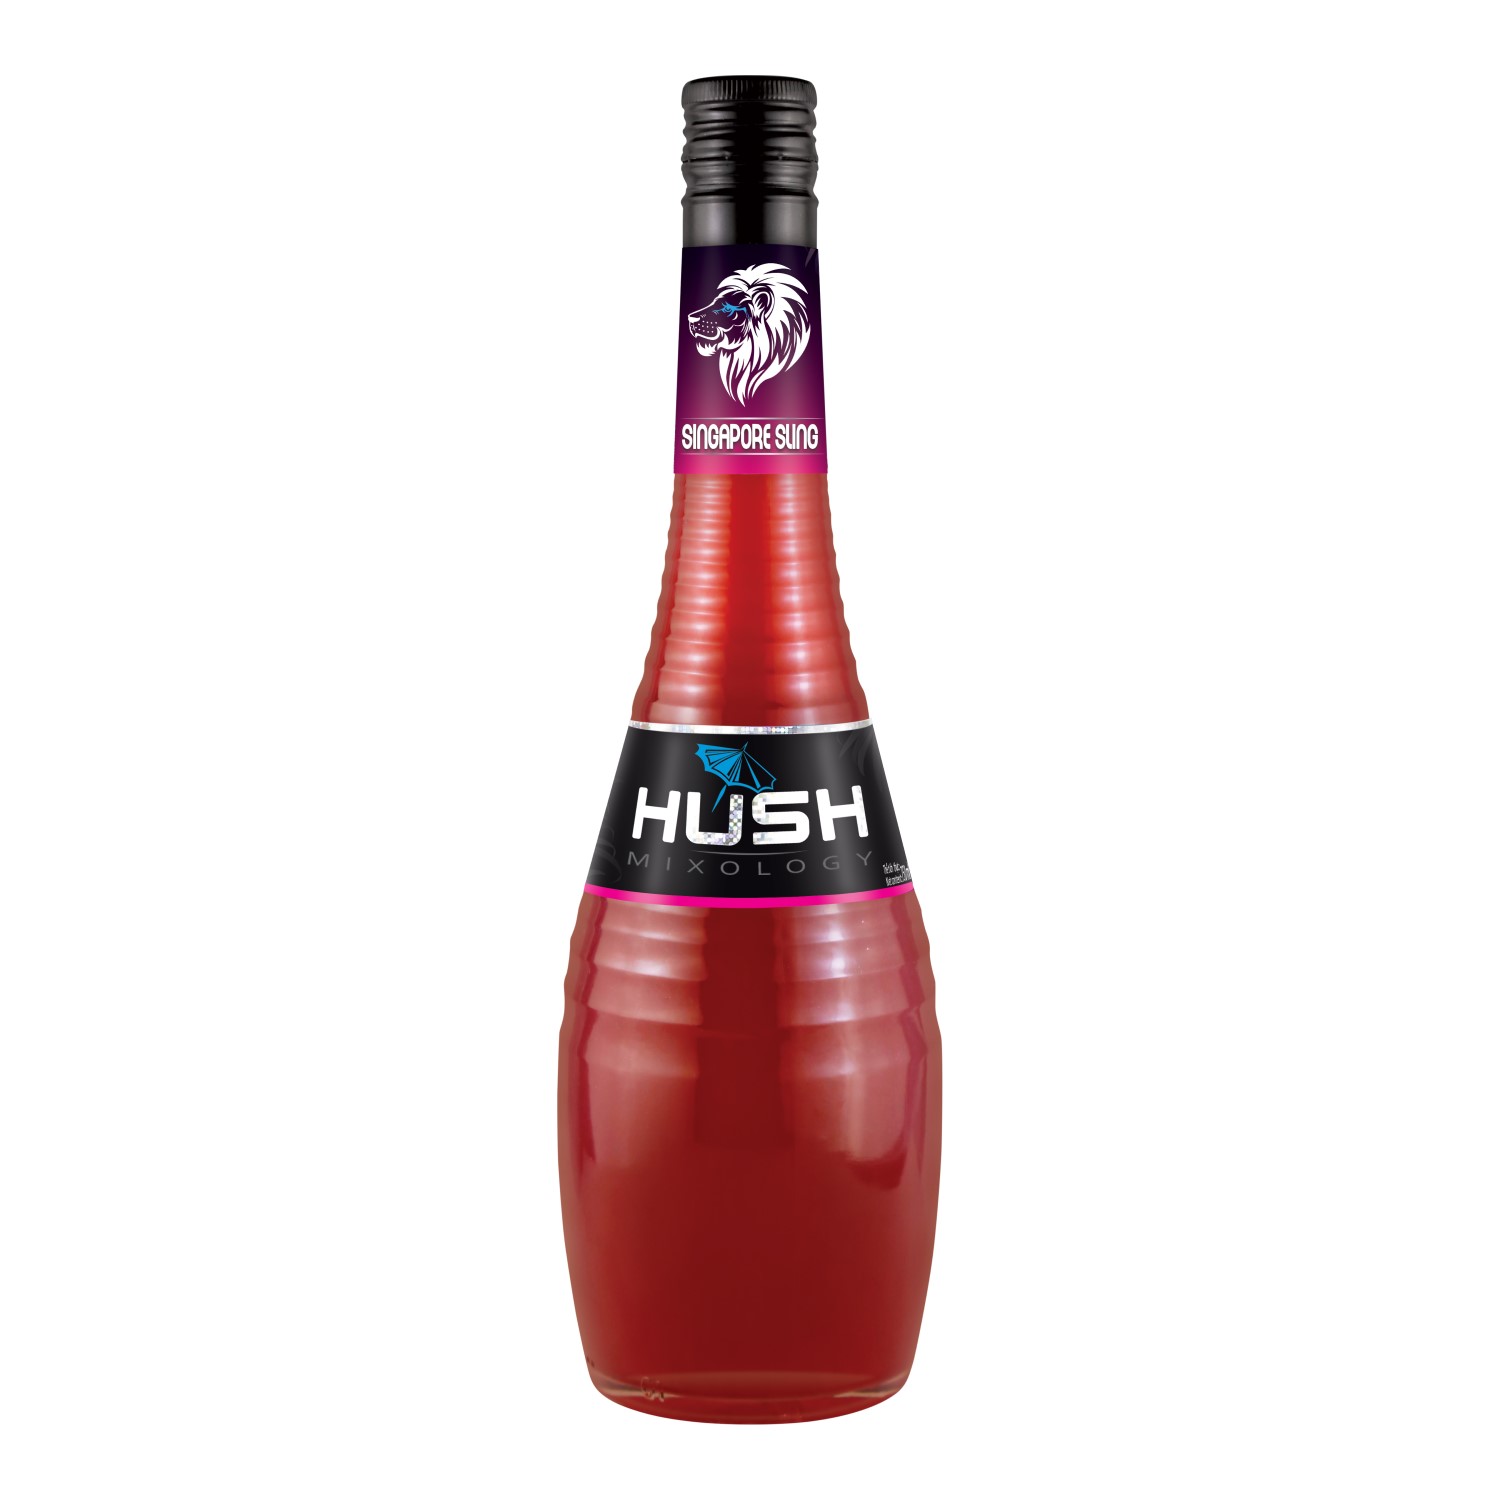 Hush Cocktail Mix Singapore Sling